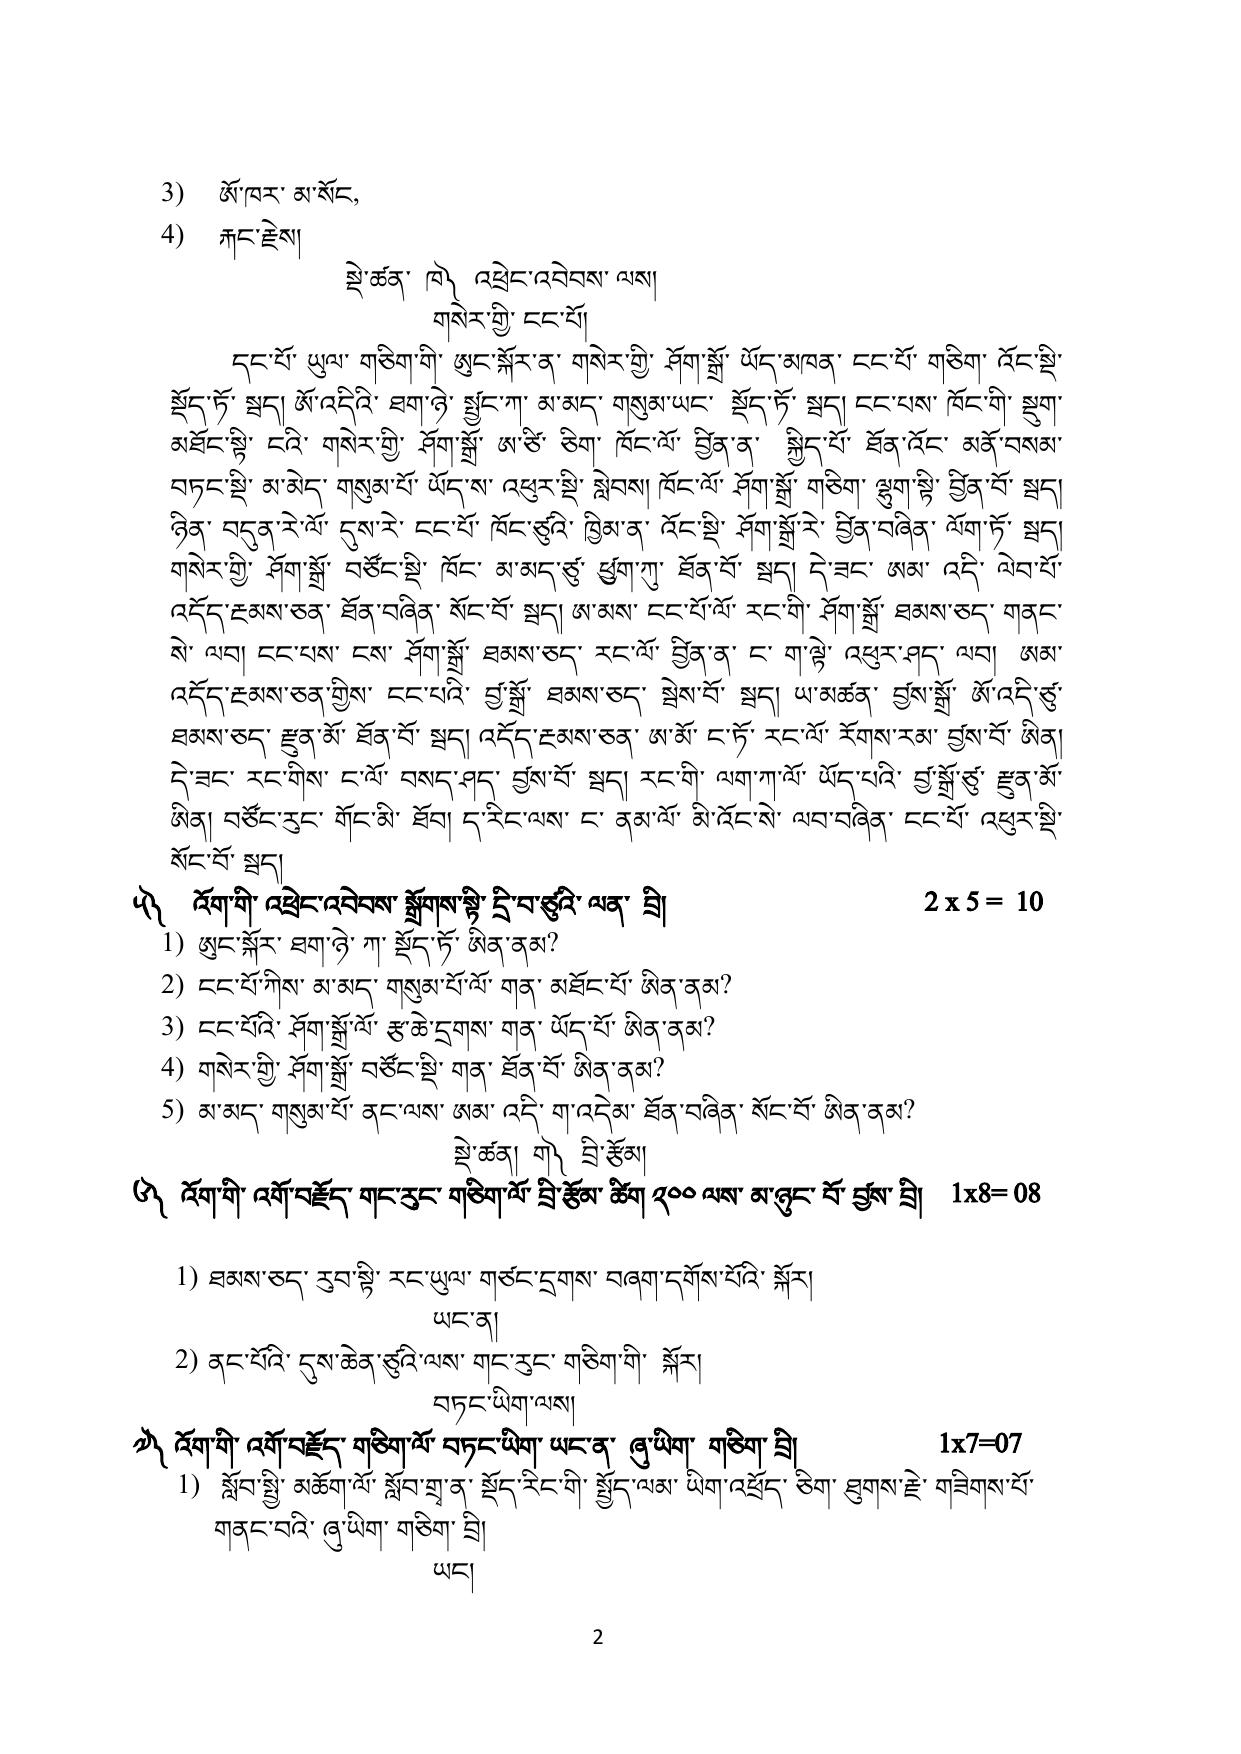 CBSE Class 12 Bhutia-Sample Paper 2018-19 - Page 2